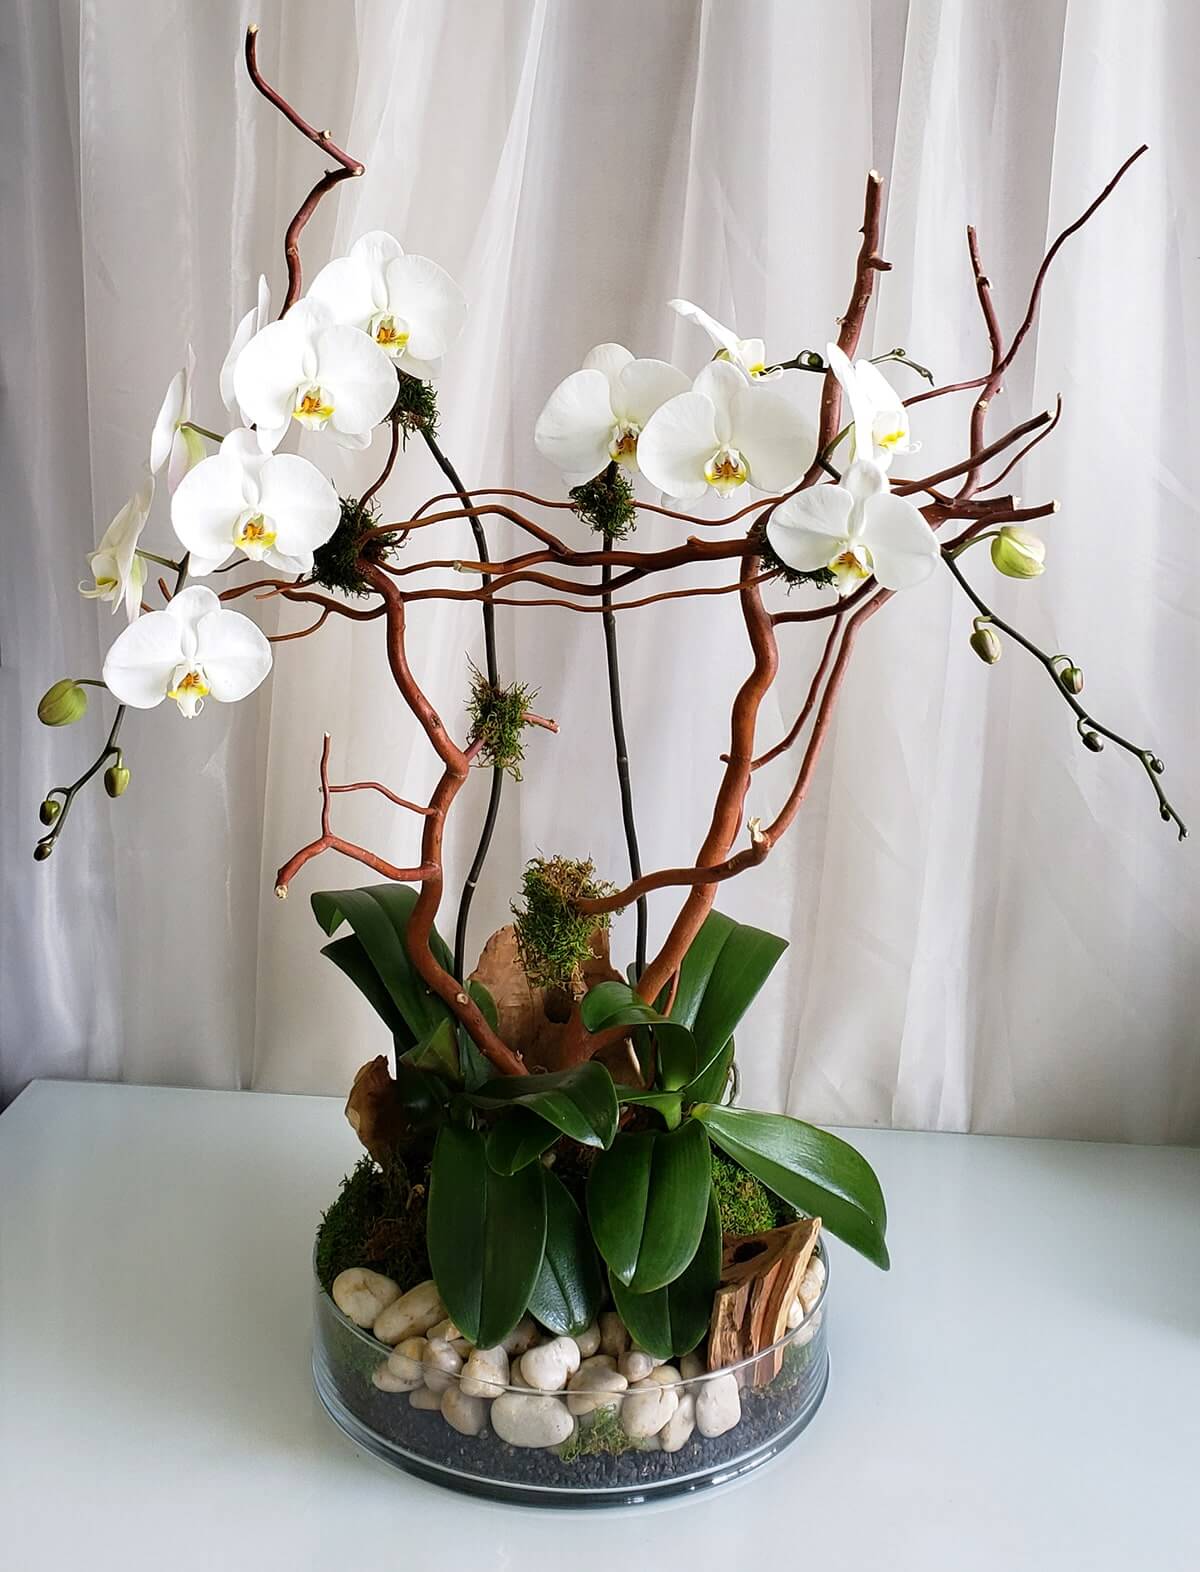 2 white phalaenopsis orchid plants